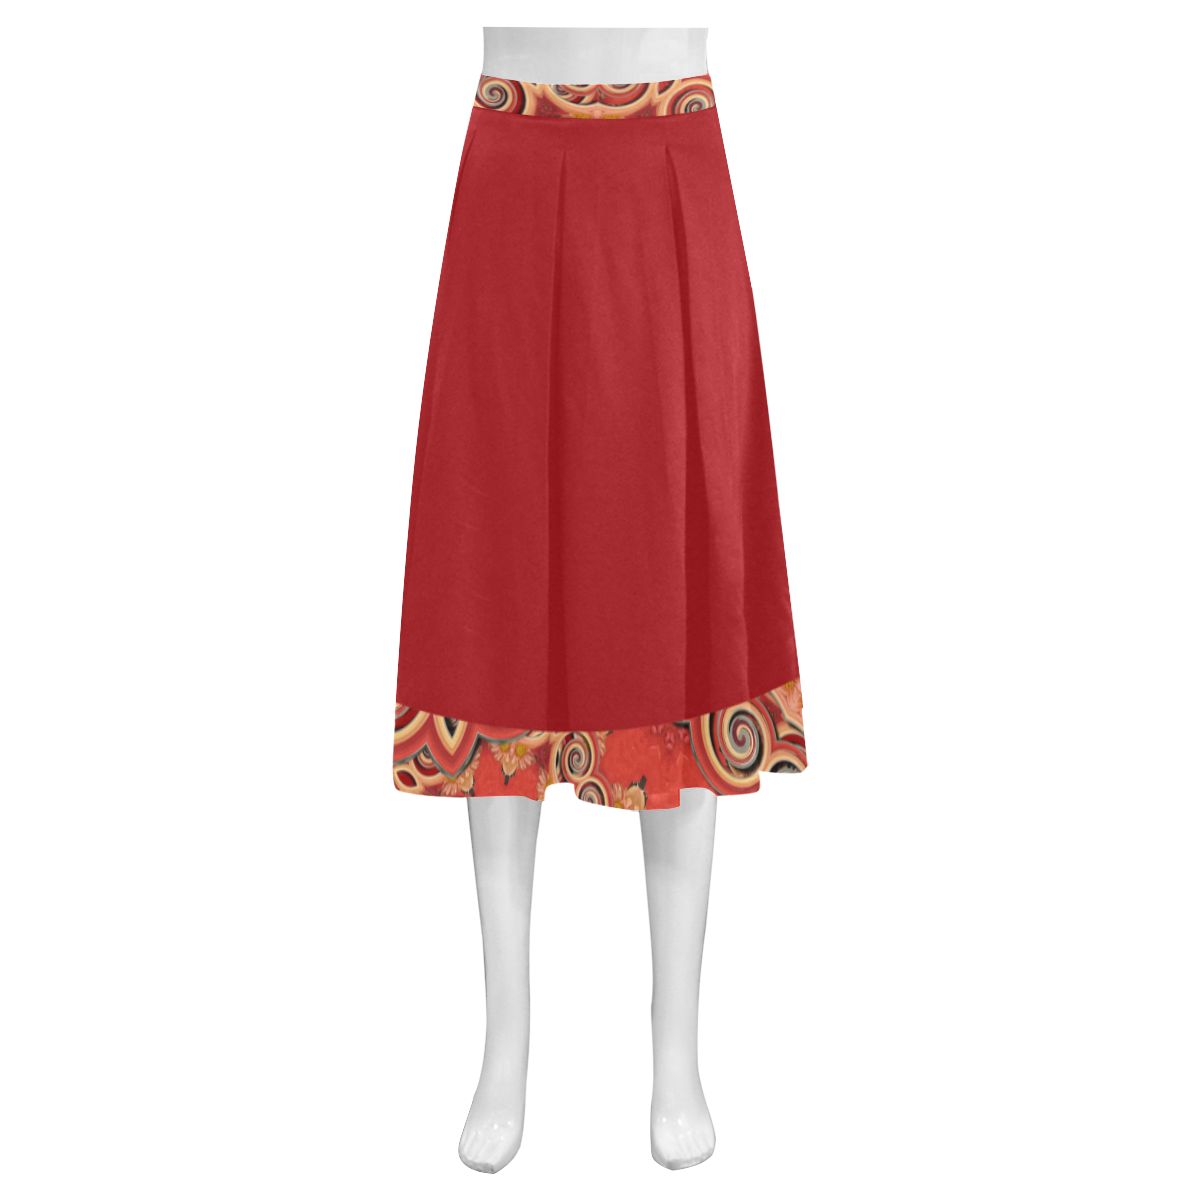 Cinnamon Color Curls and Swirls Mnemosyne Women's Crepe Skirt (Model D16)